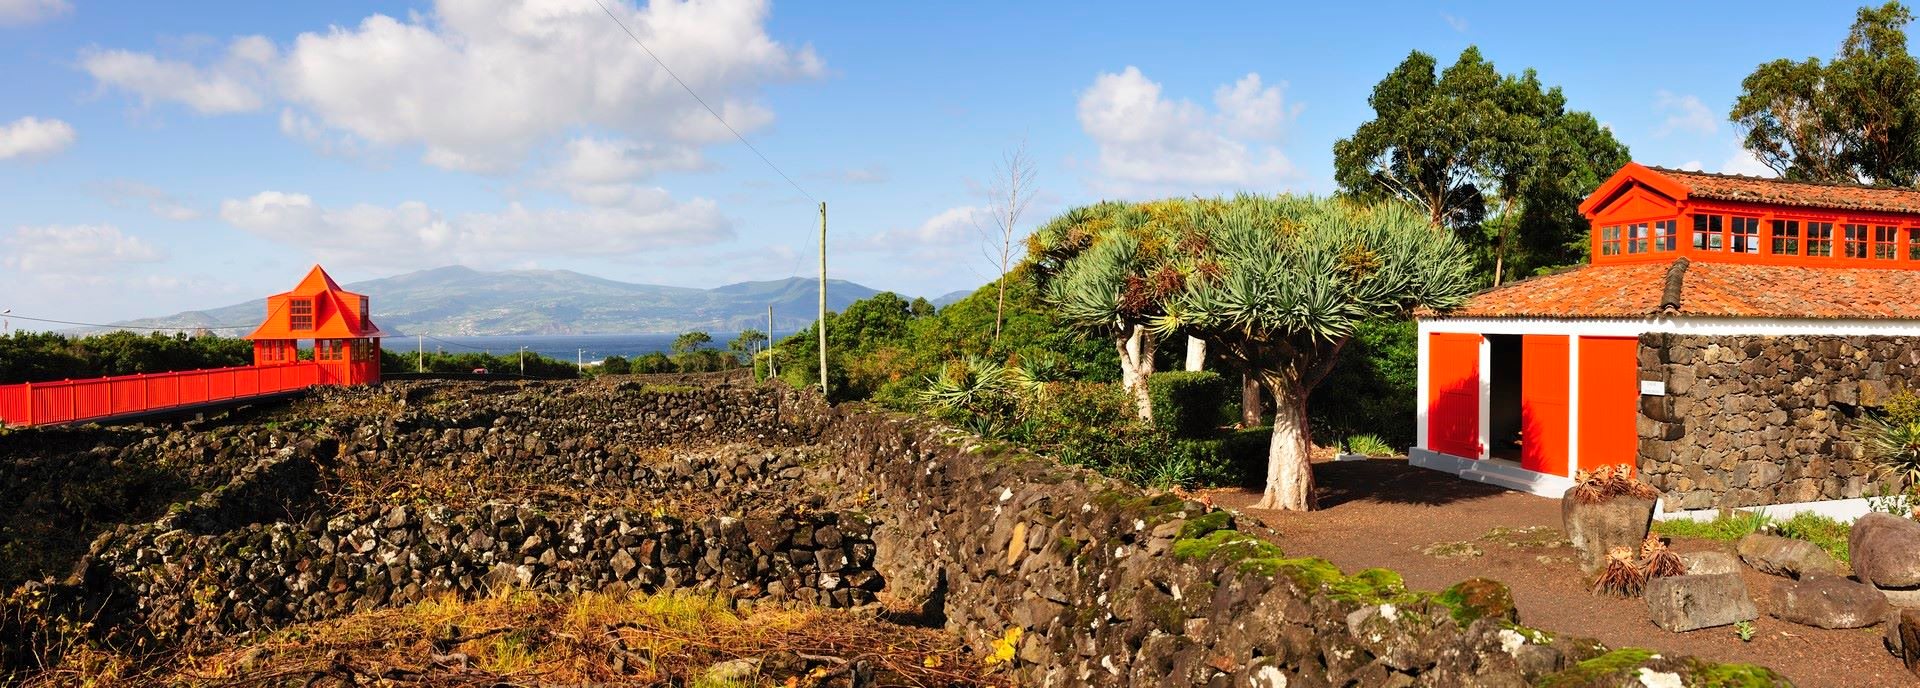 Vineyards Landscape 3 - Pico Island